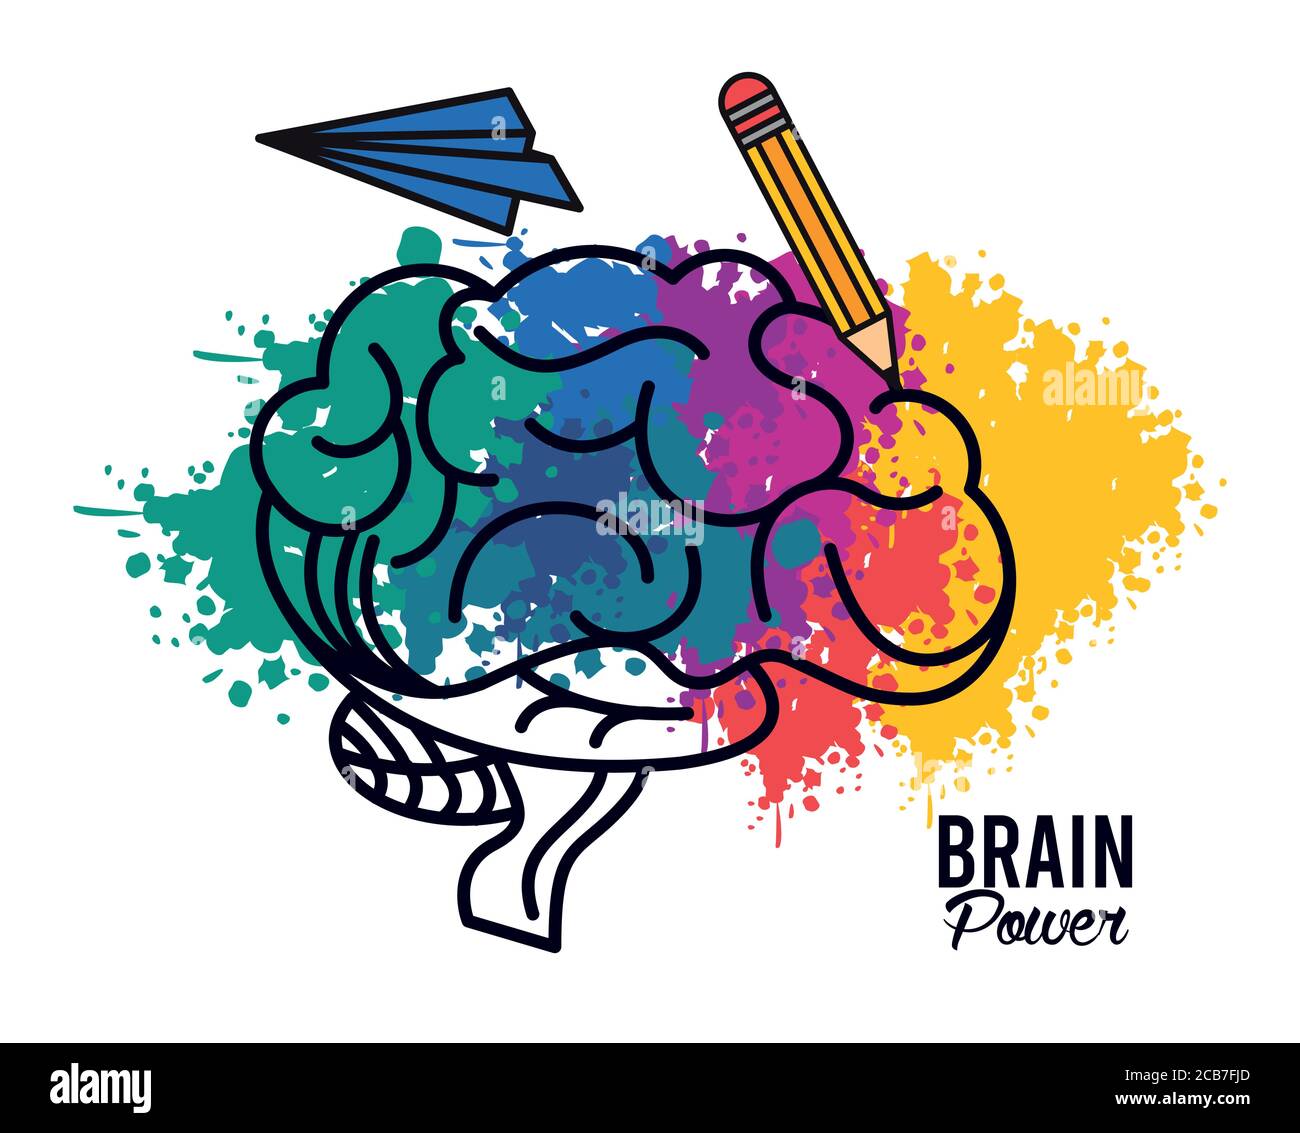 Brain Poster Ideas